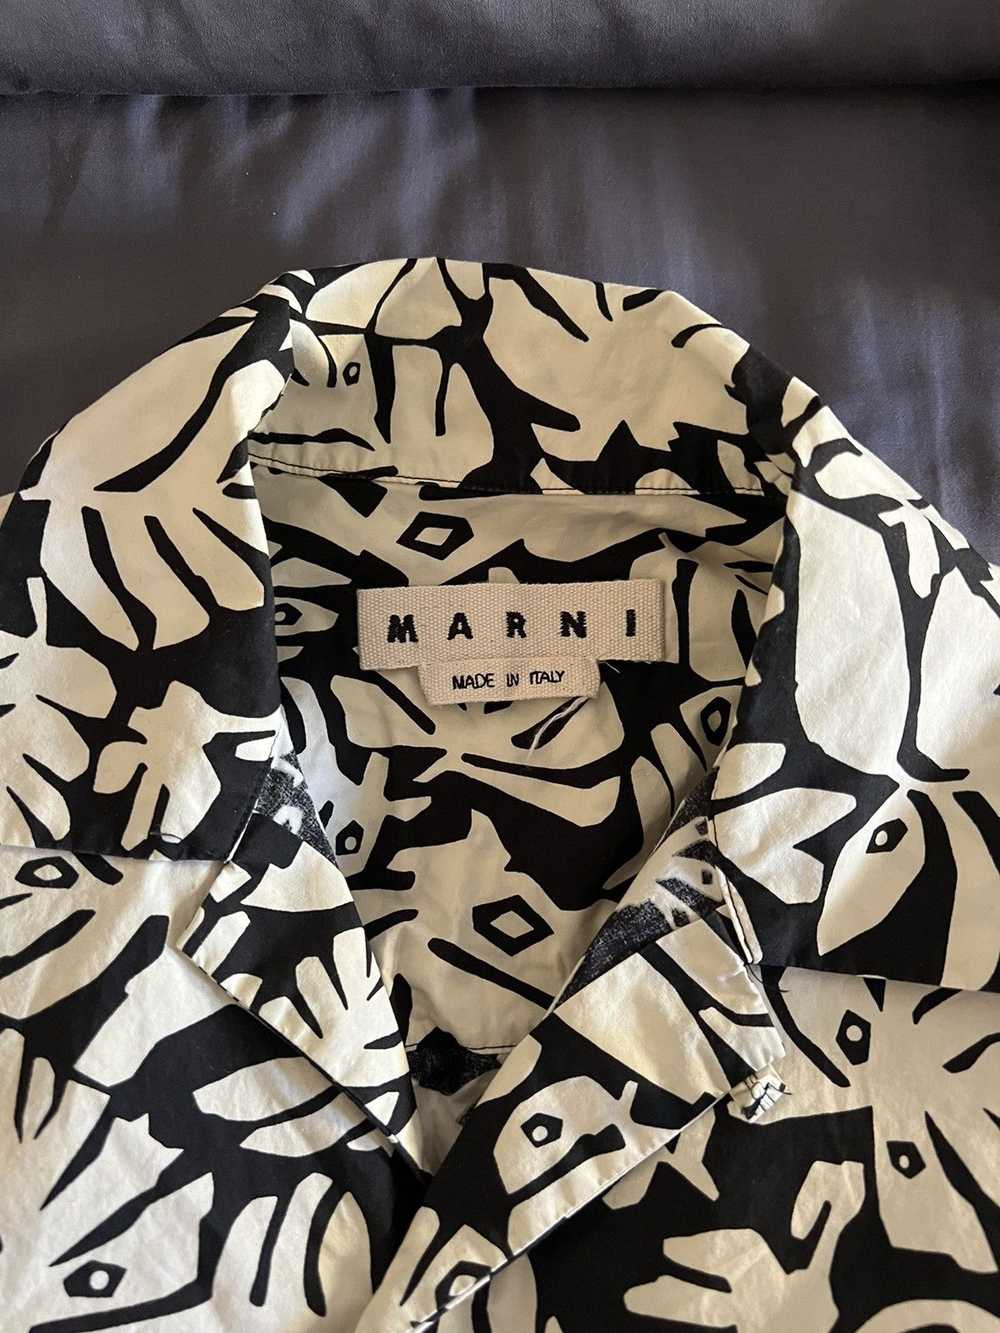 Marni Marni SS2020 Tropical Floral Print Shirt - image 3